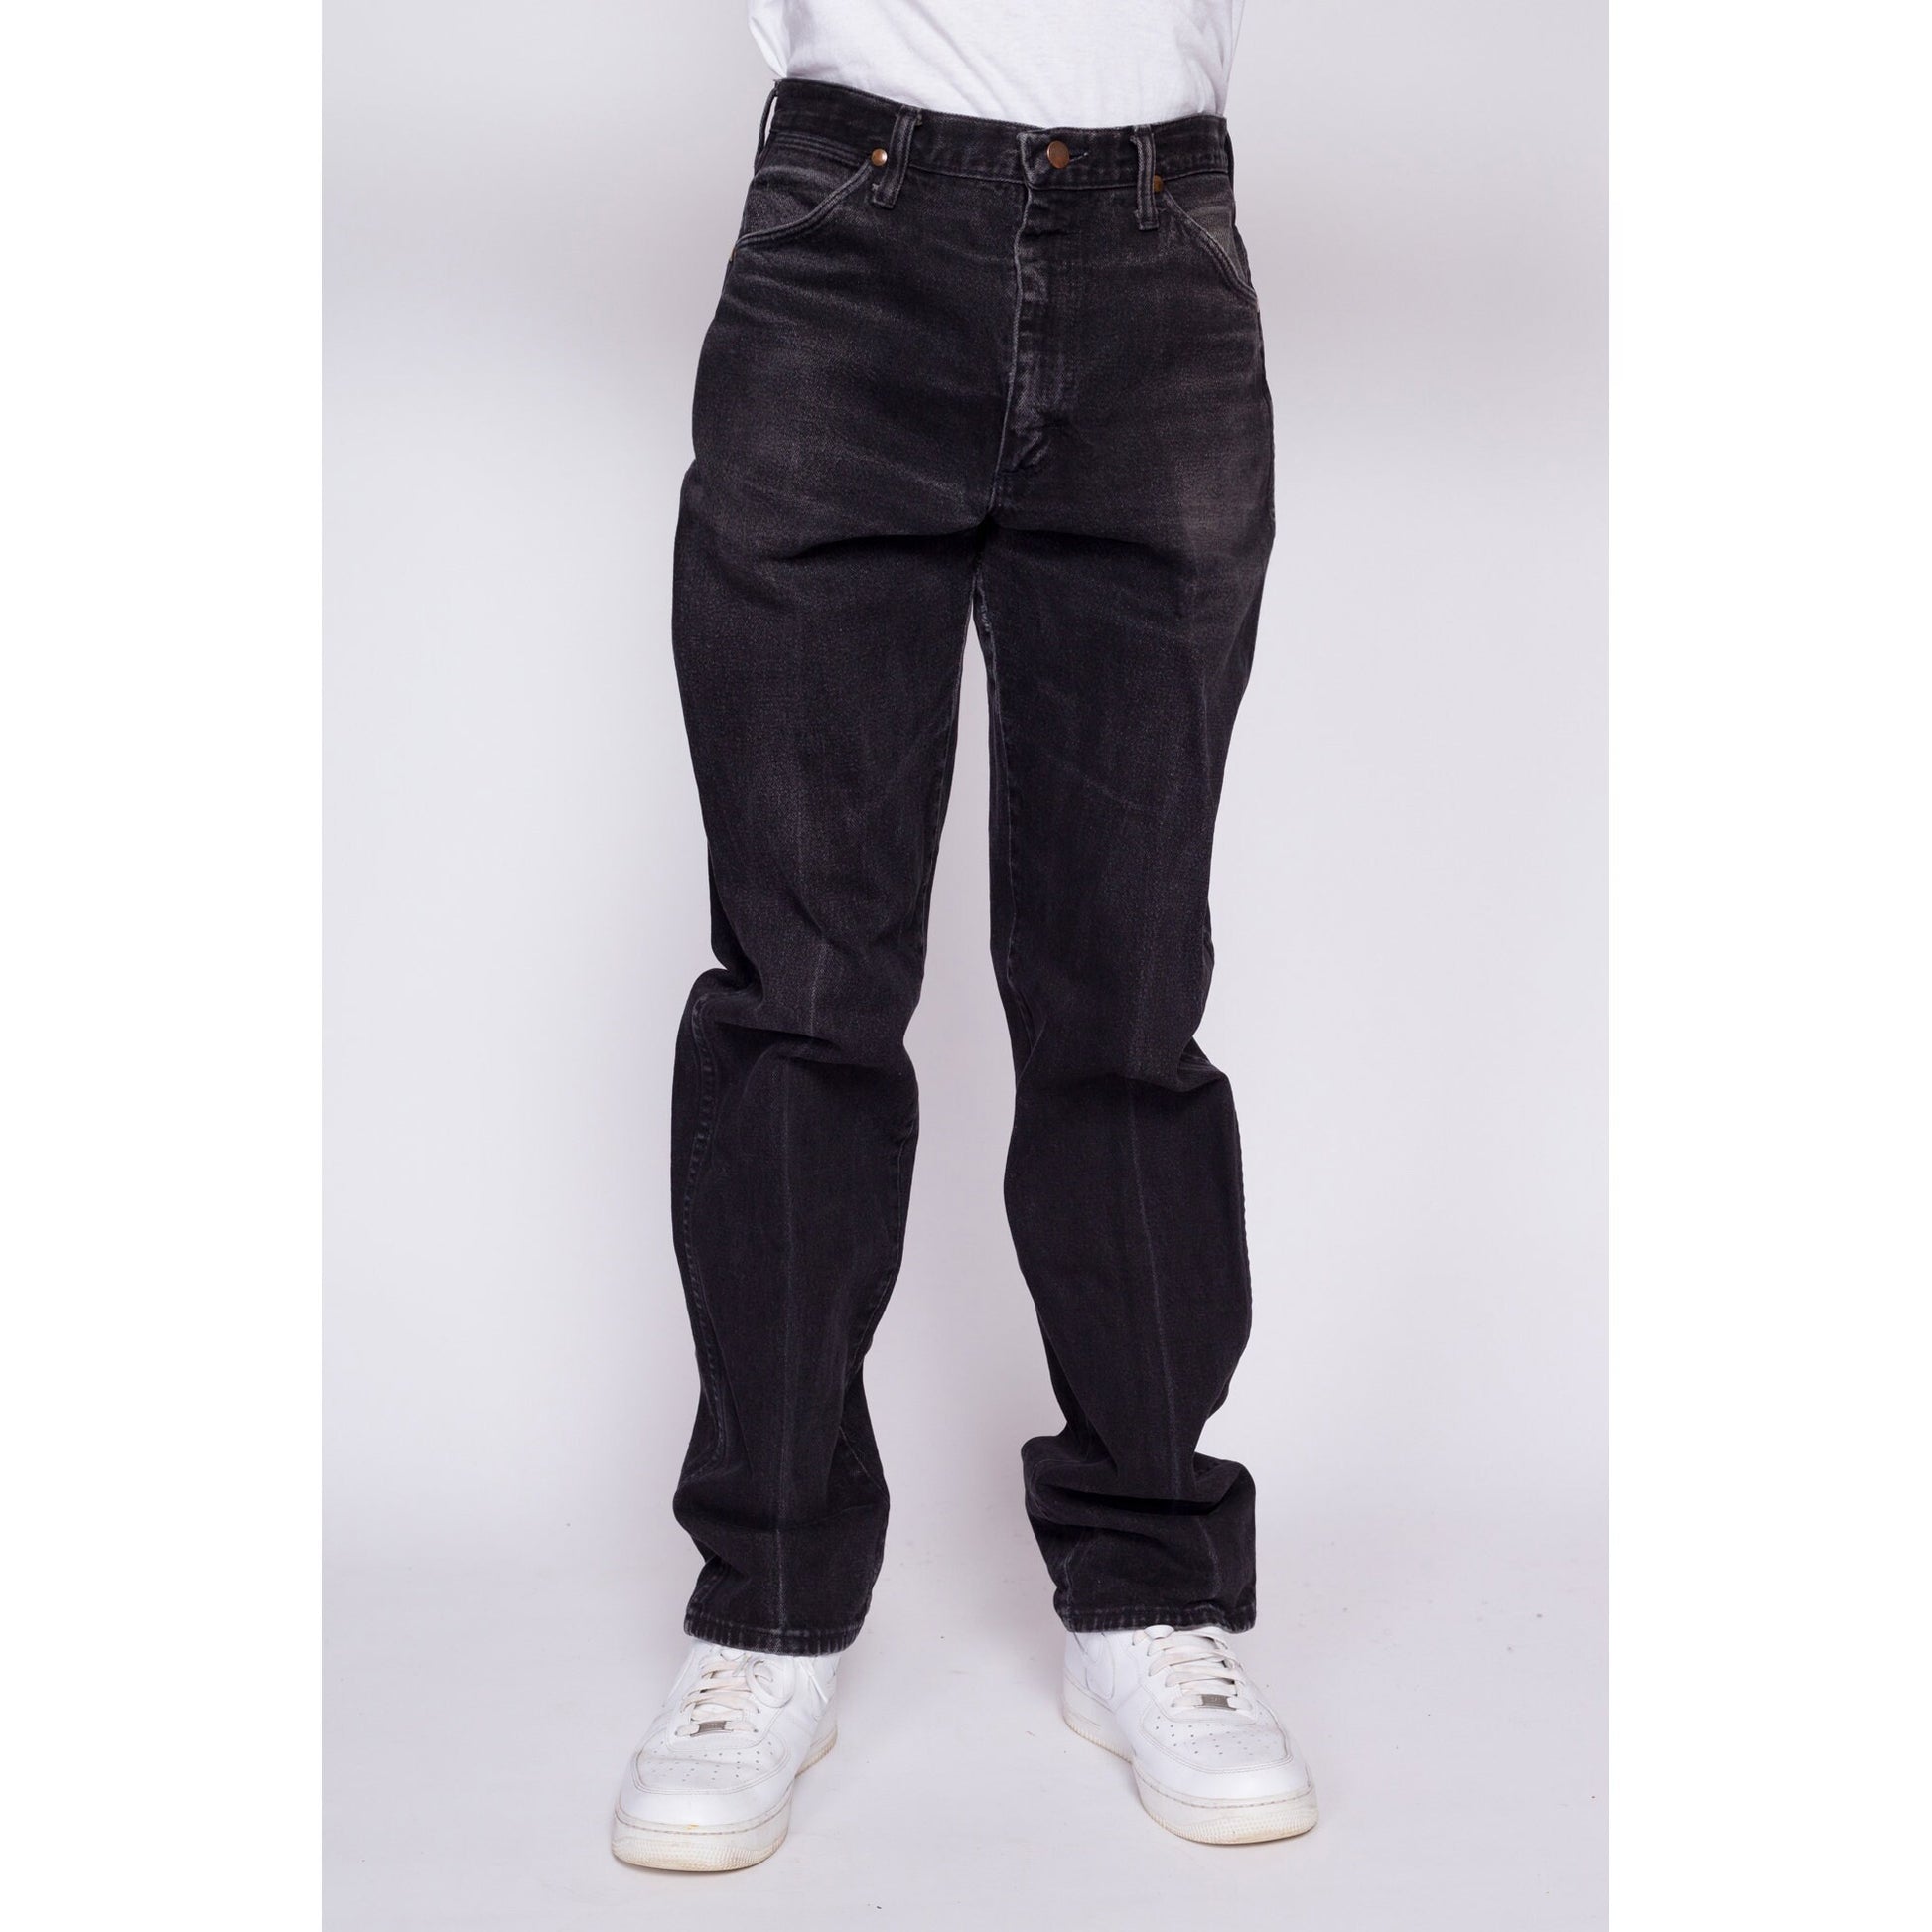 70s 80s Wrangler Black Jeans - 33x36 | Vintage Faded Denim Distressed Baggy Straight Leg Jeans